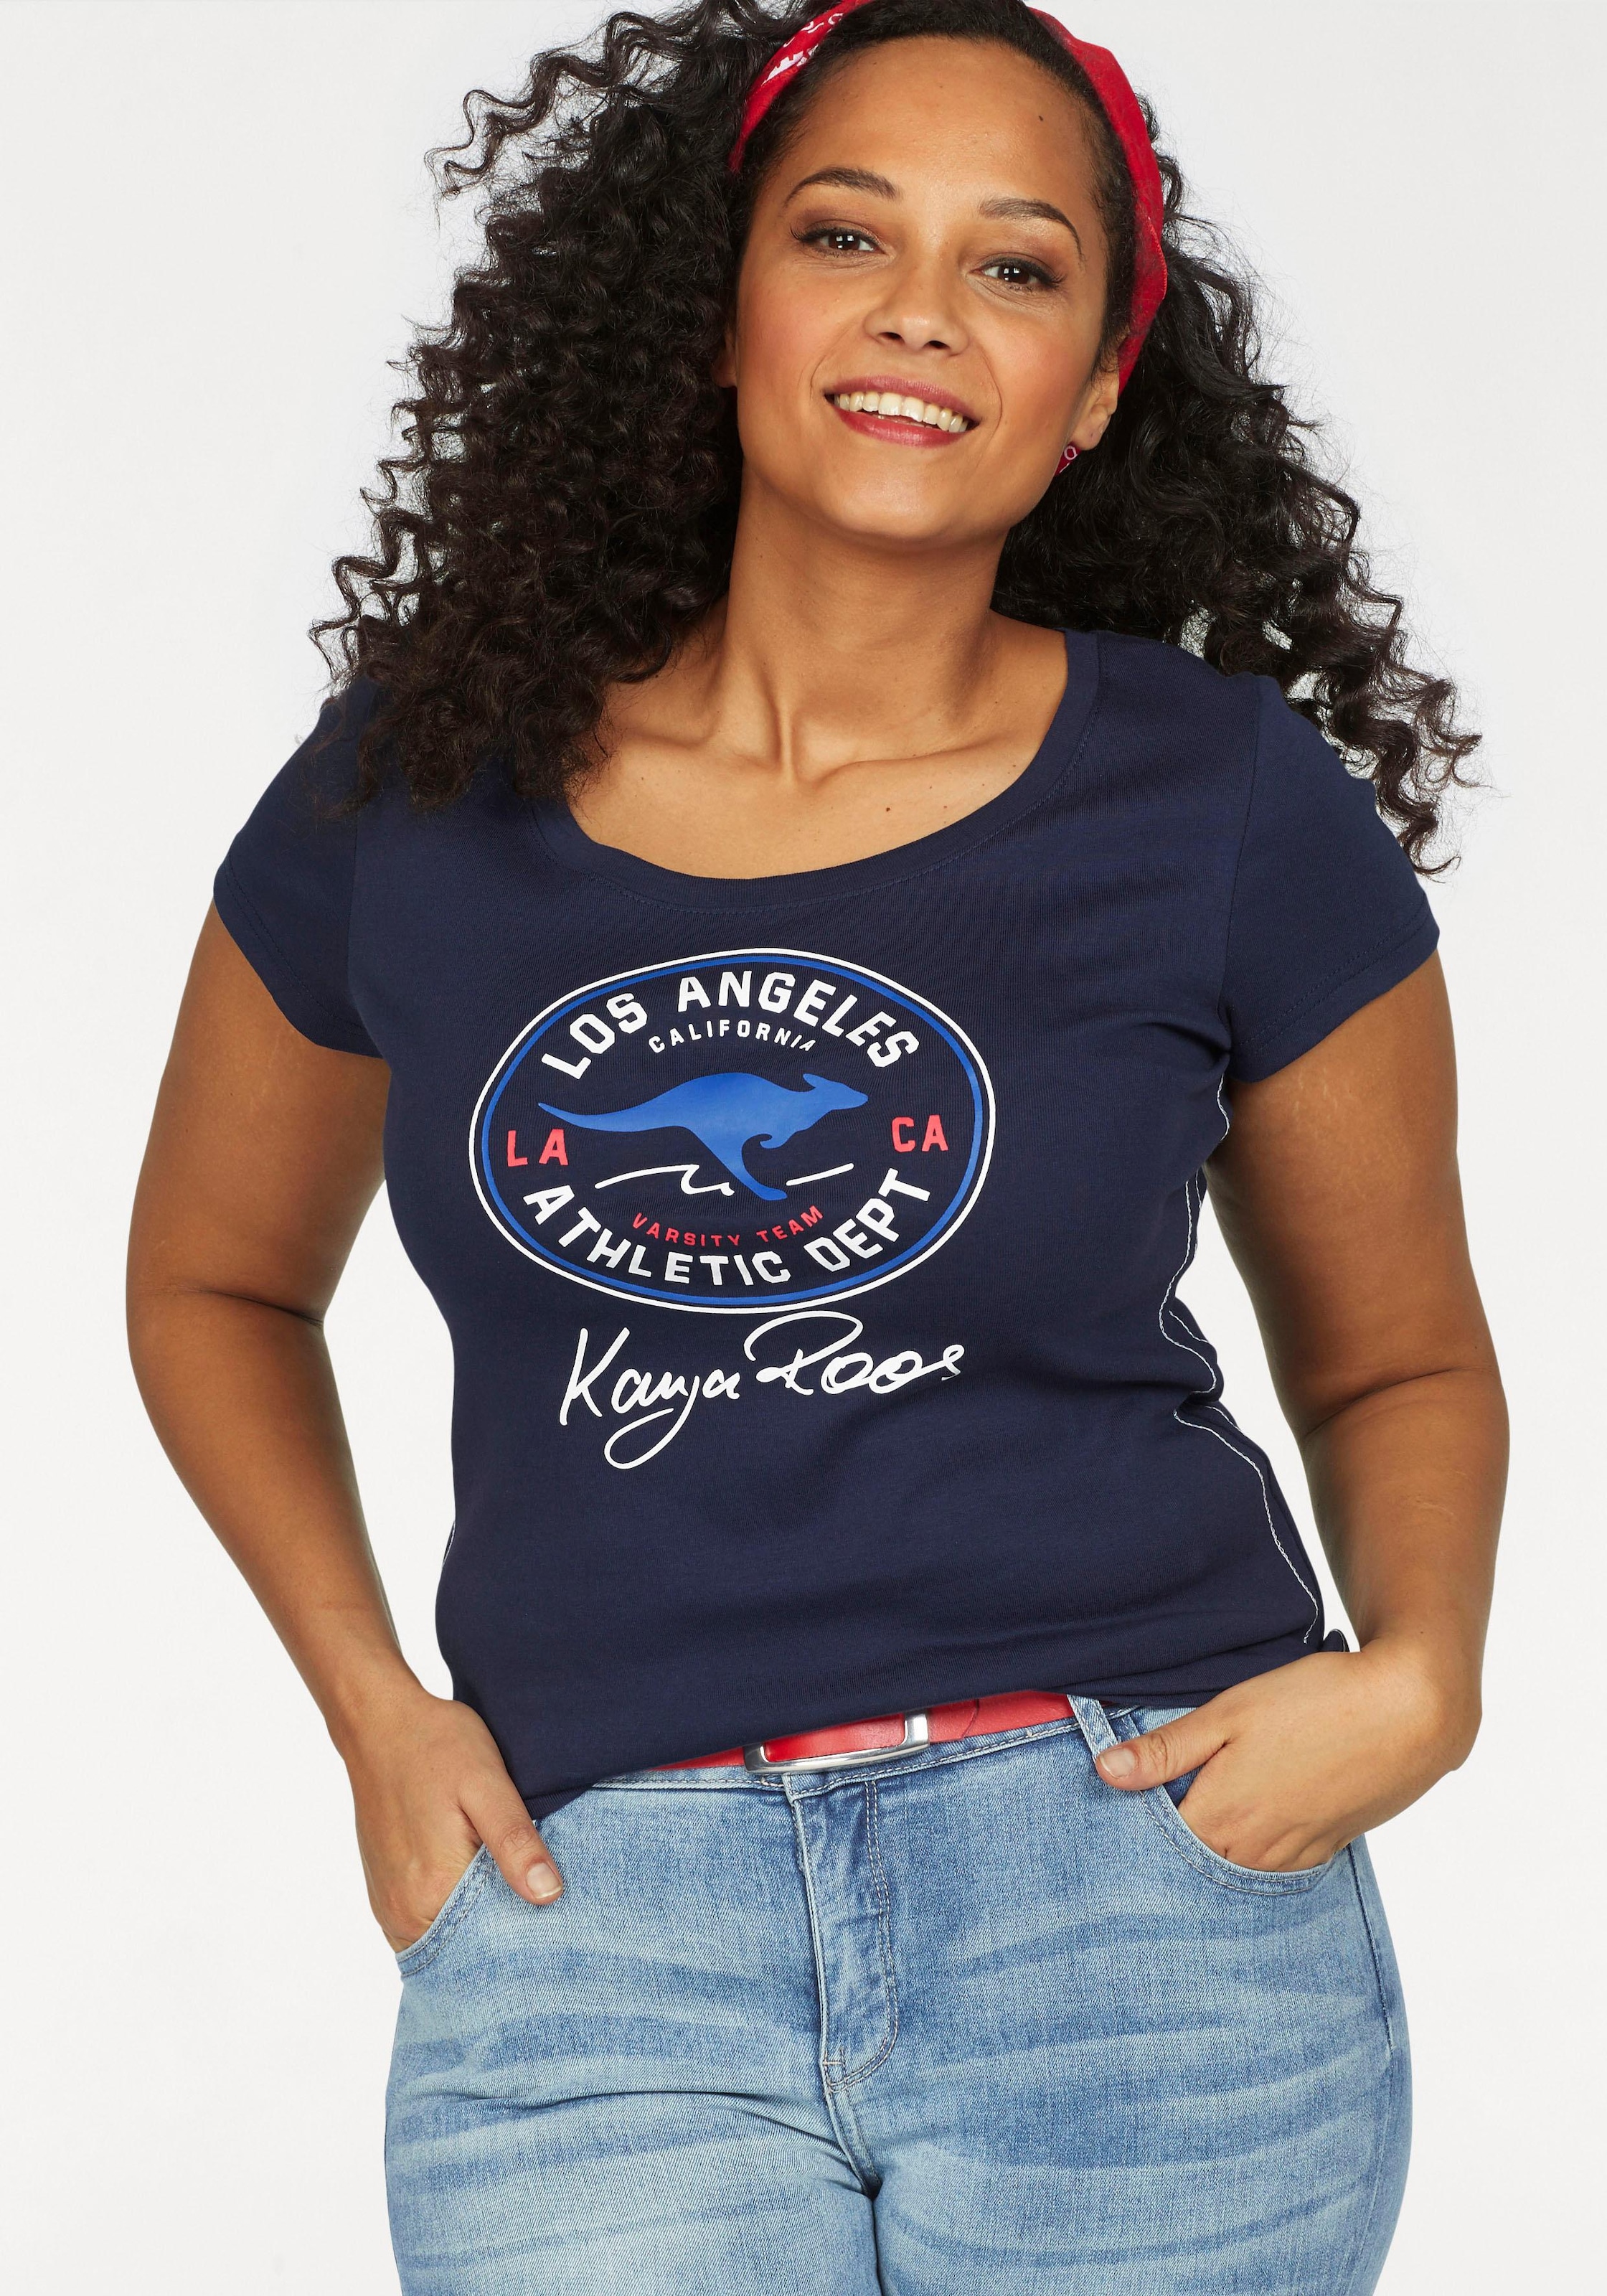 KangaROOS T-Shirt, mit grossem Retro Label-Druck vorne